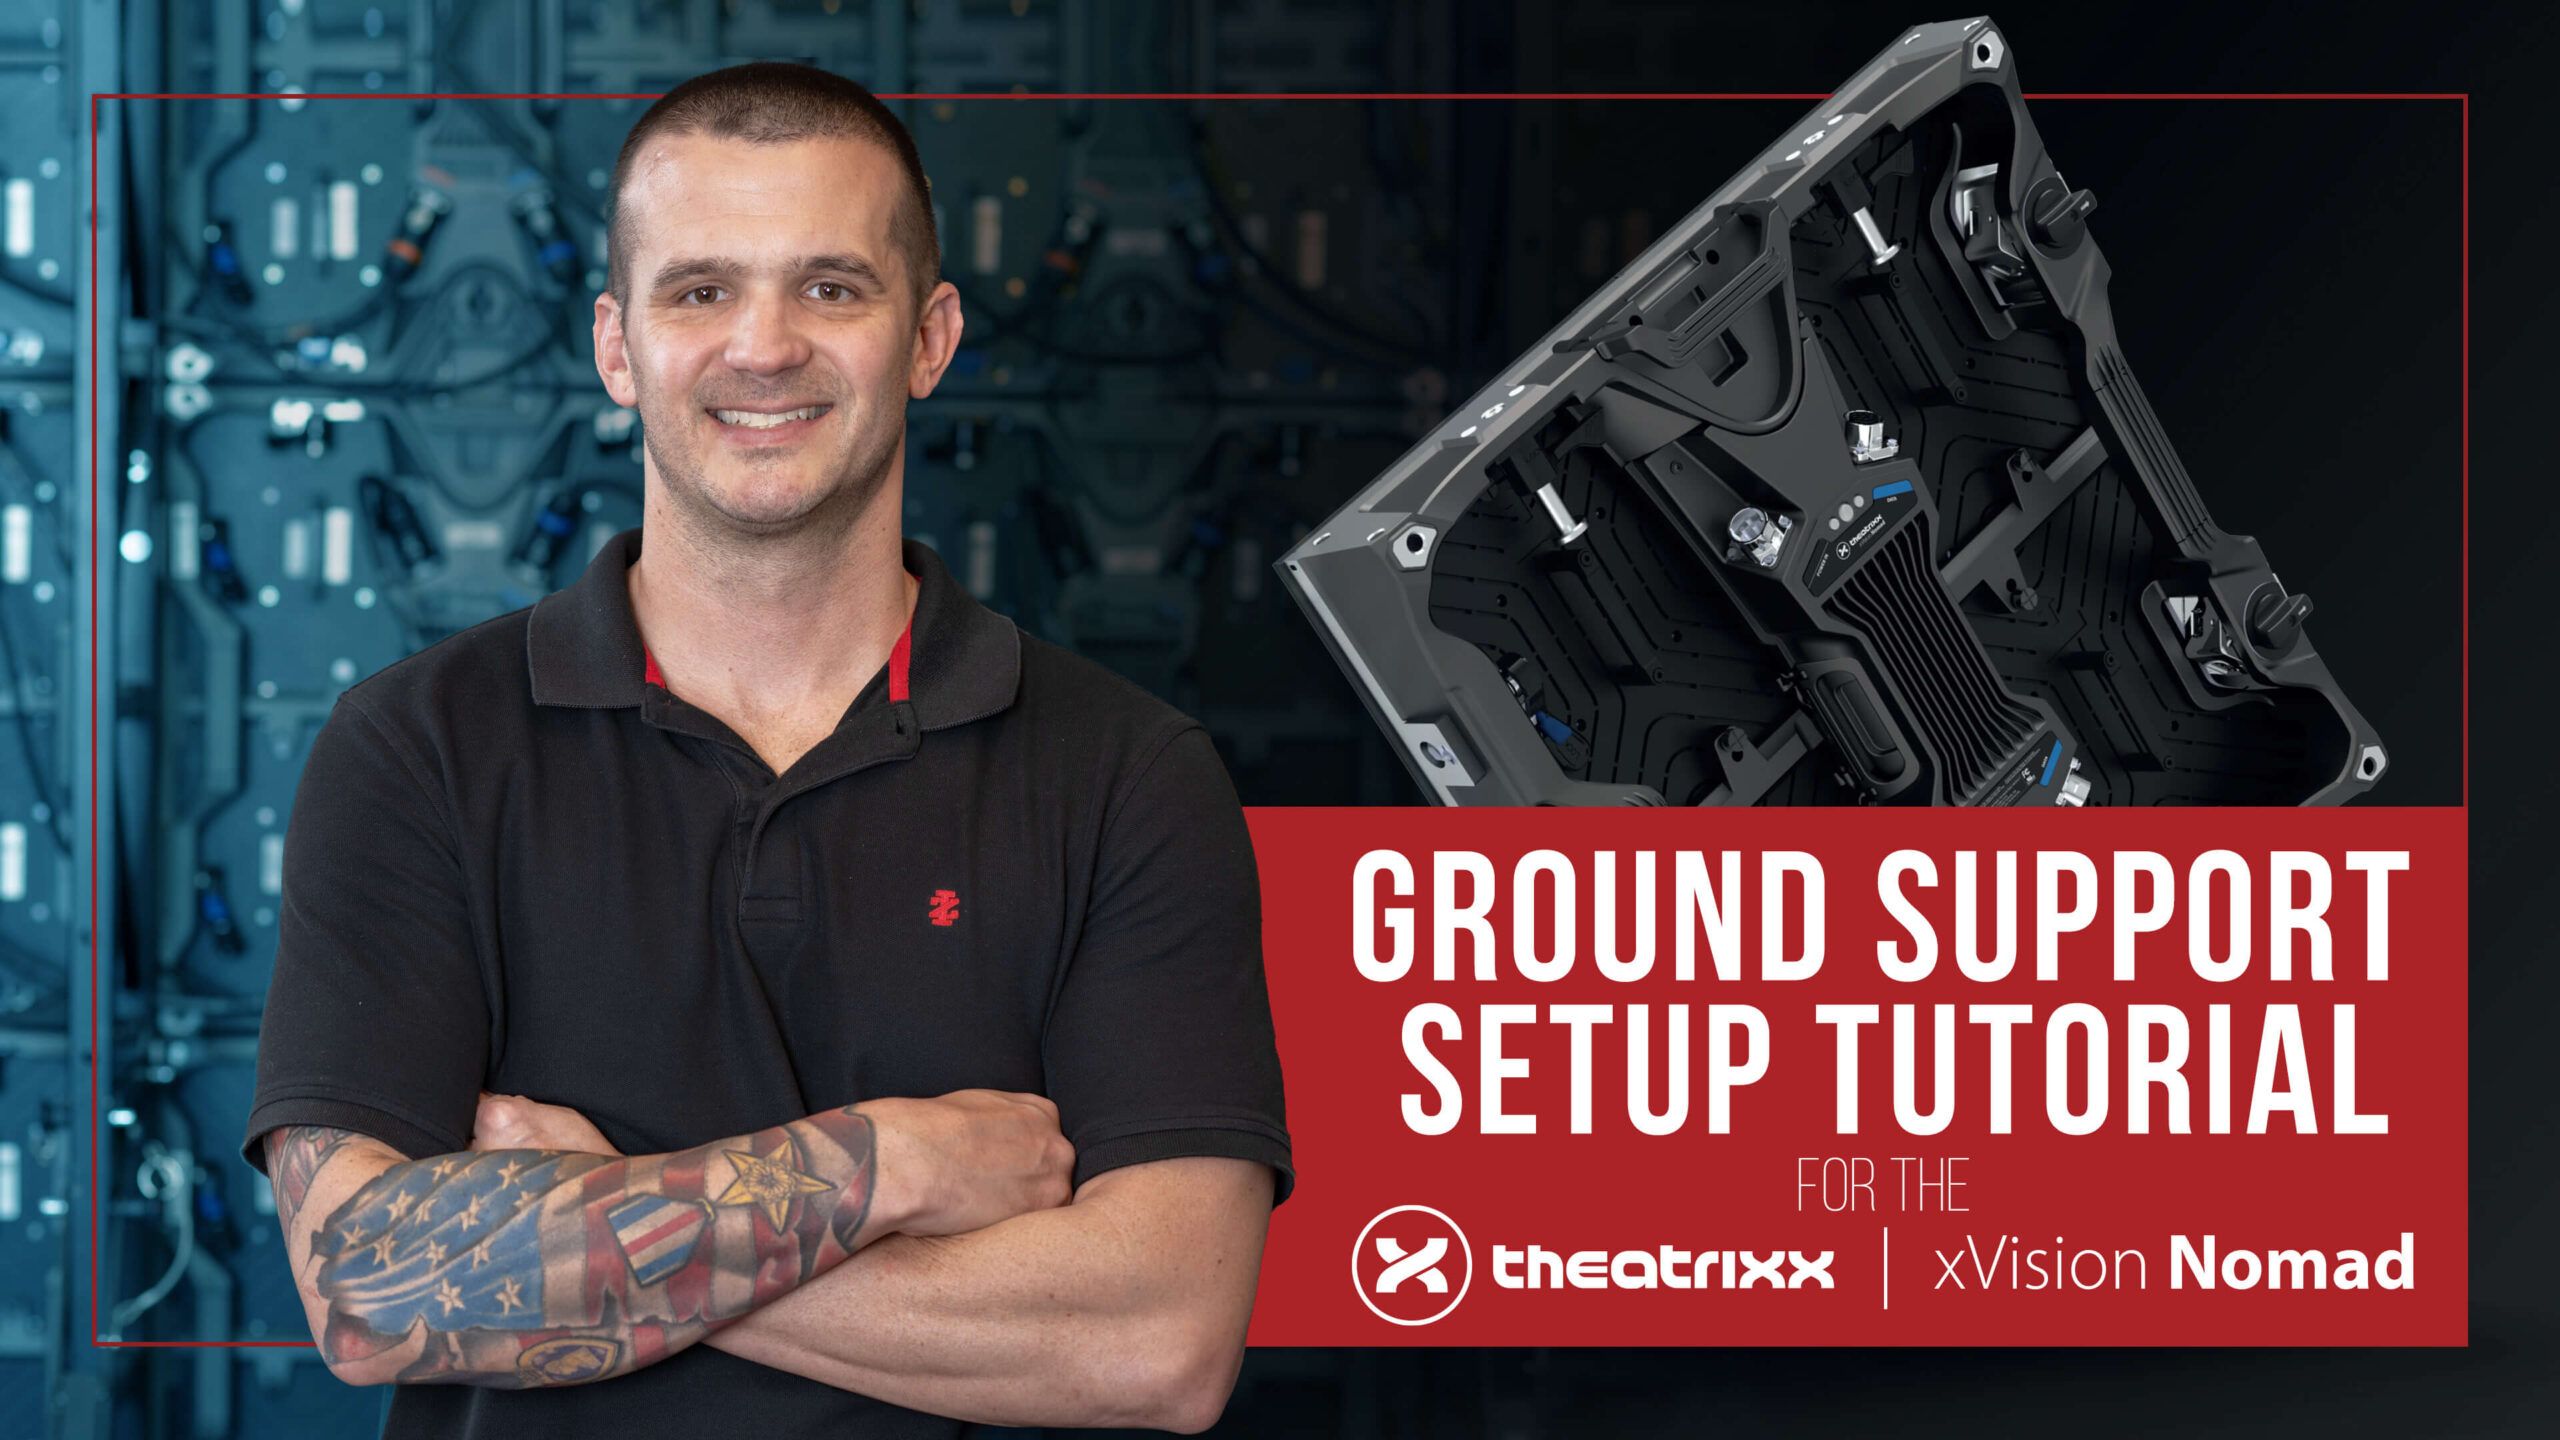 Ground support setup tutorial.